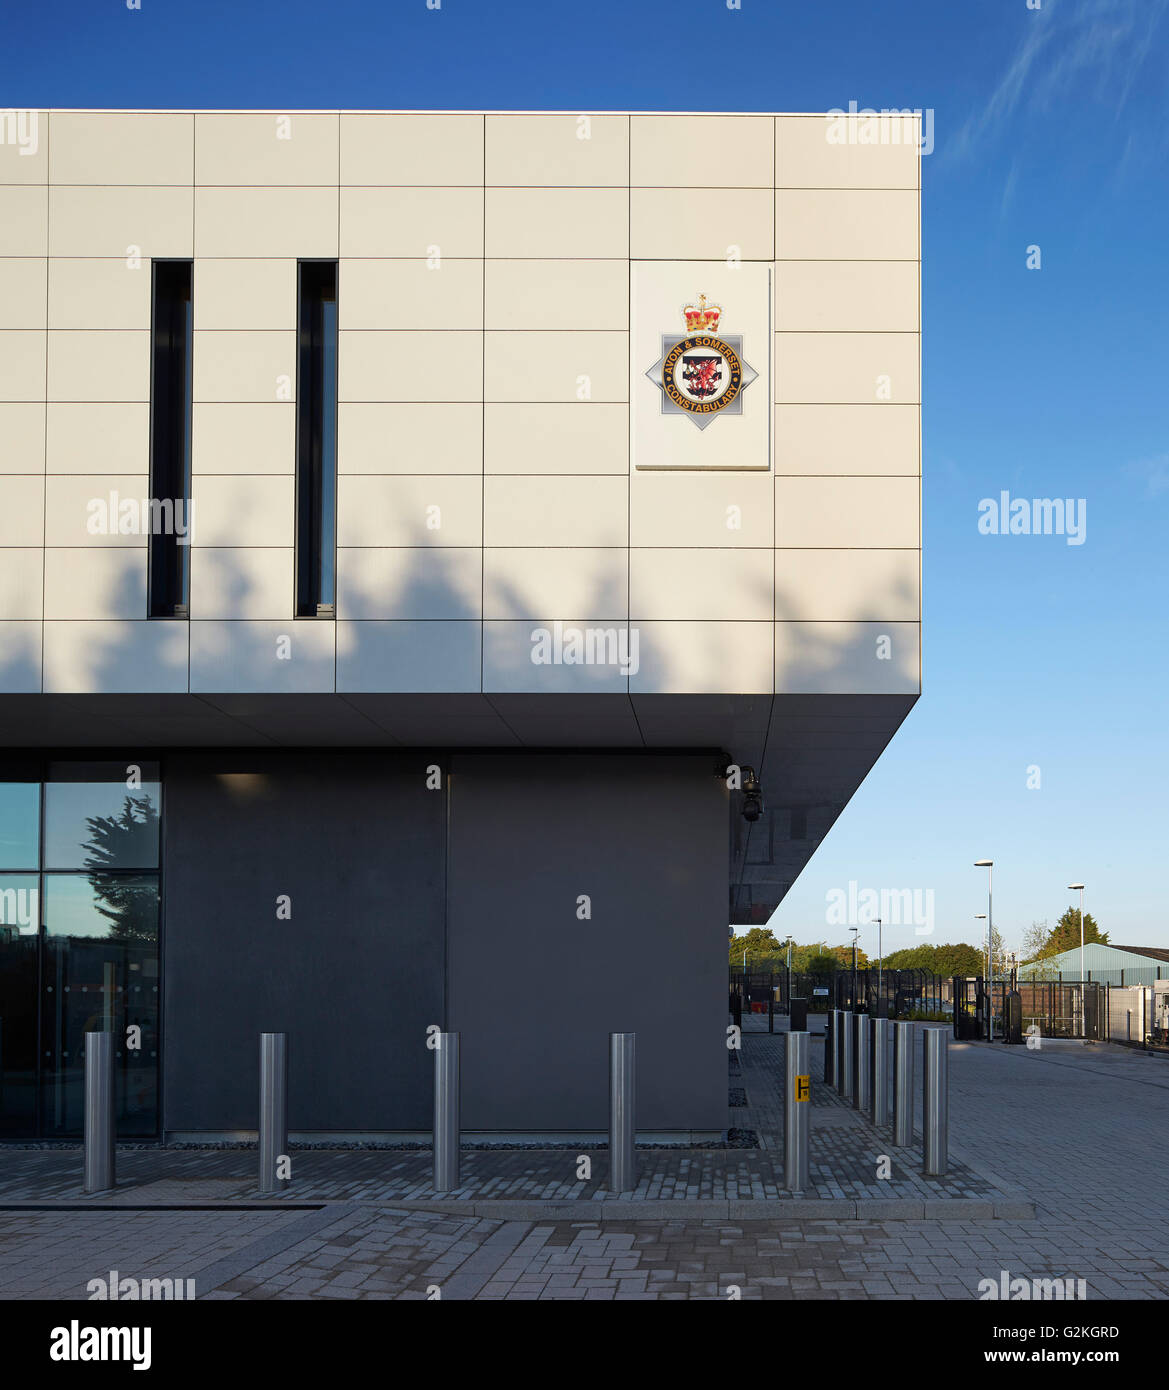 Detail of exterior cladding with emblem and signage. Keynsham Custody Suite and Prosecution and Investigation Facility, Keynsham, United Kingdom. Architect: Haverstock Associates LLP, 2014. Stock Photo